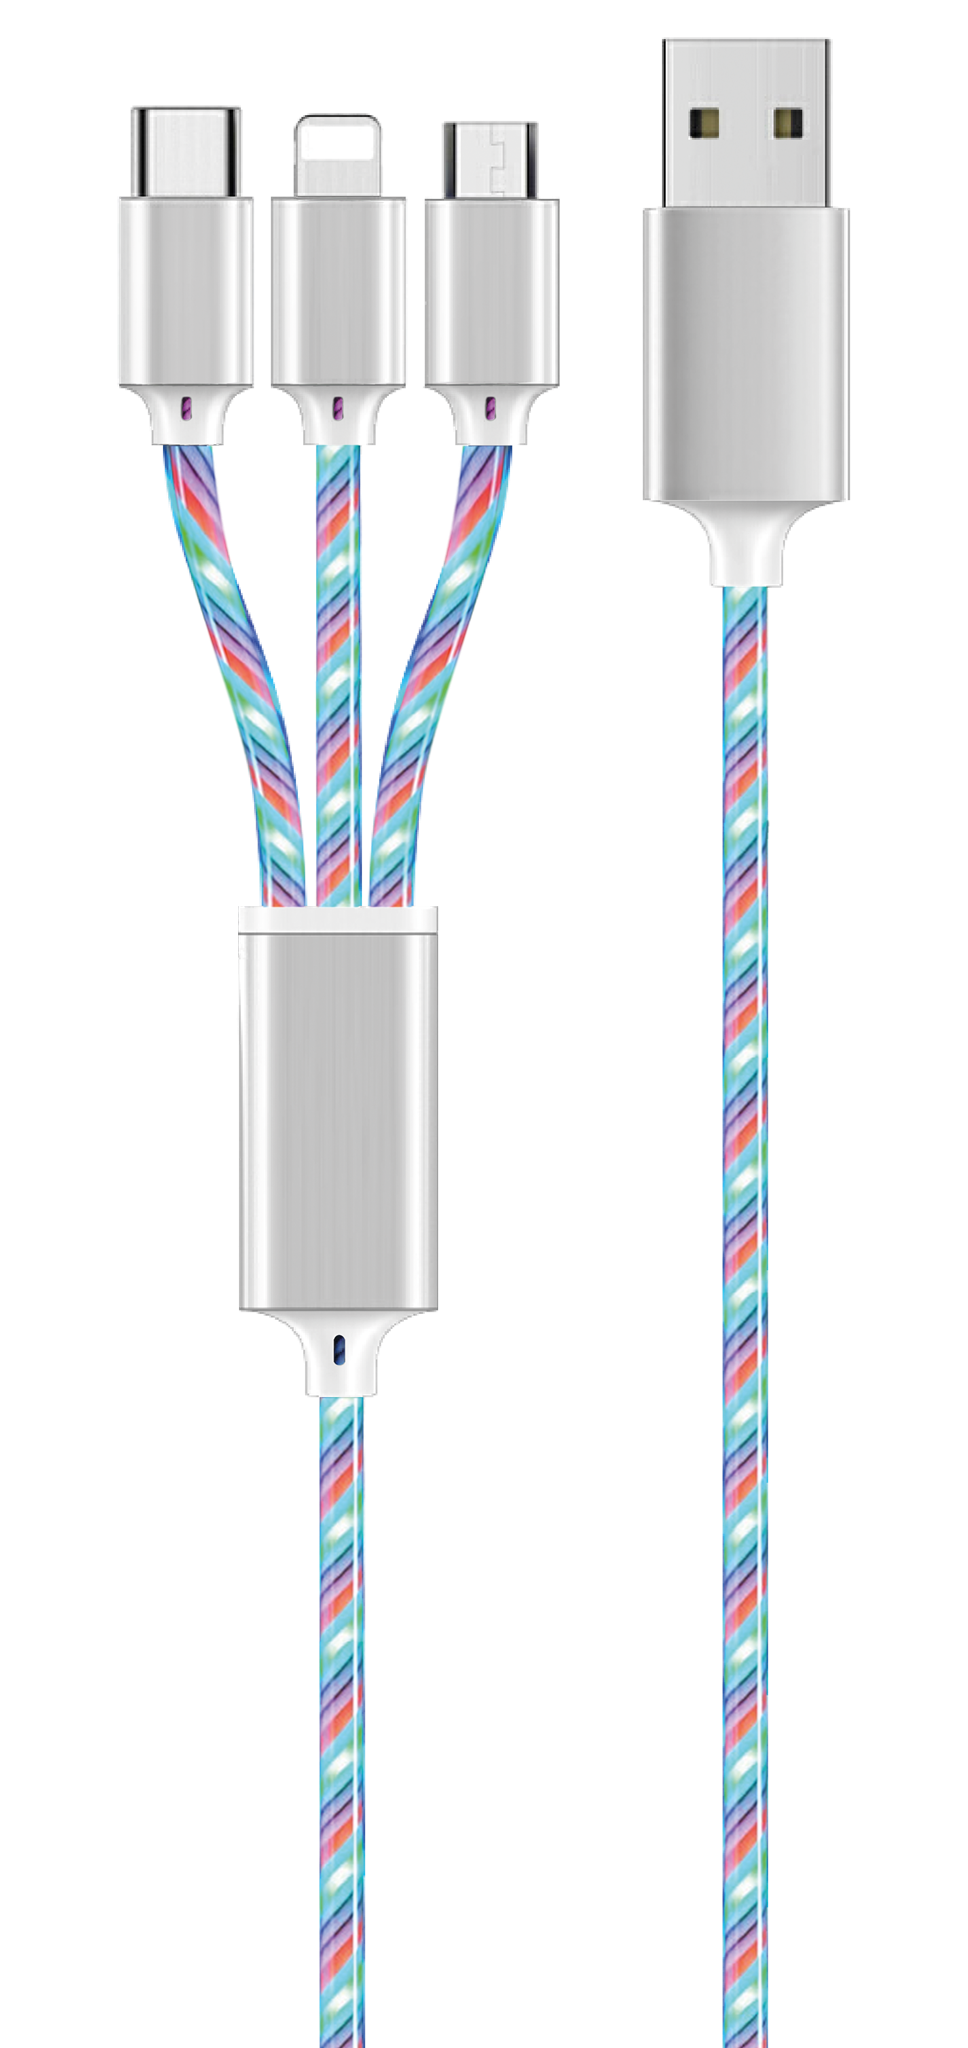 Bild von 3 in 1 USB LED Kabel - multicolor - 100cm